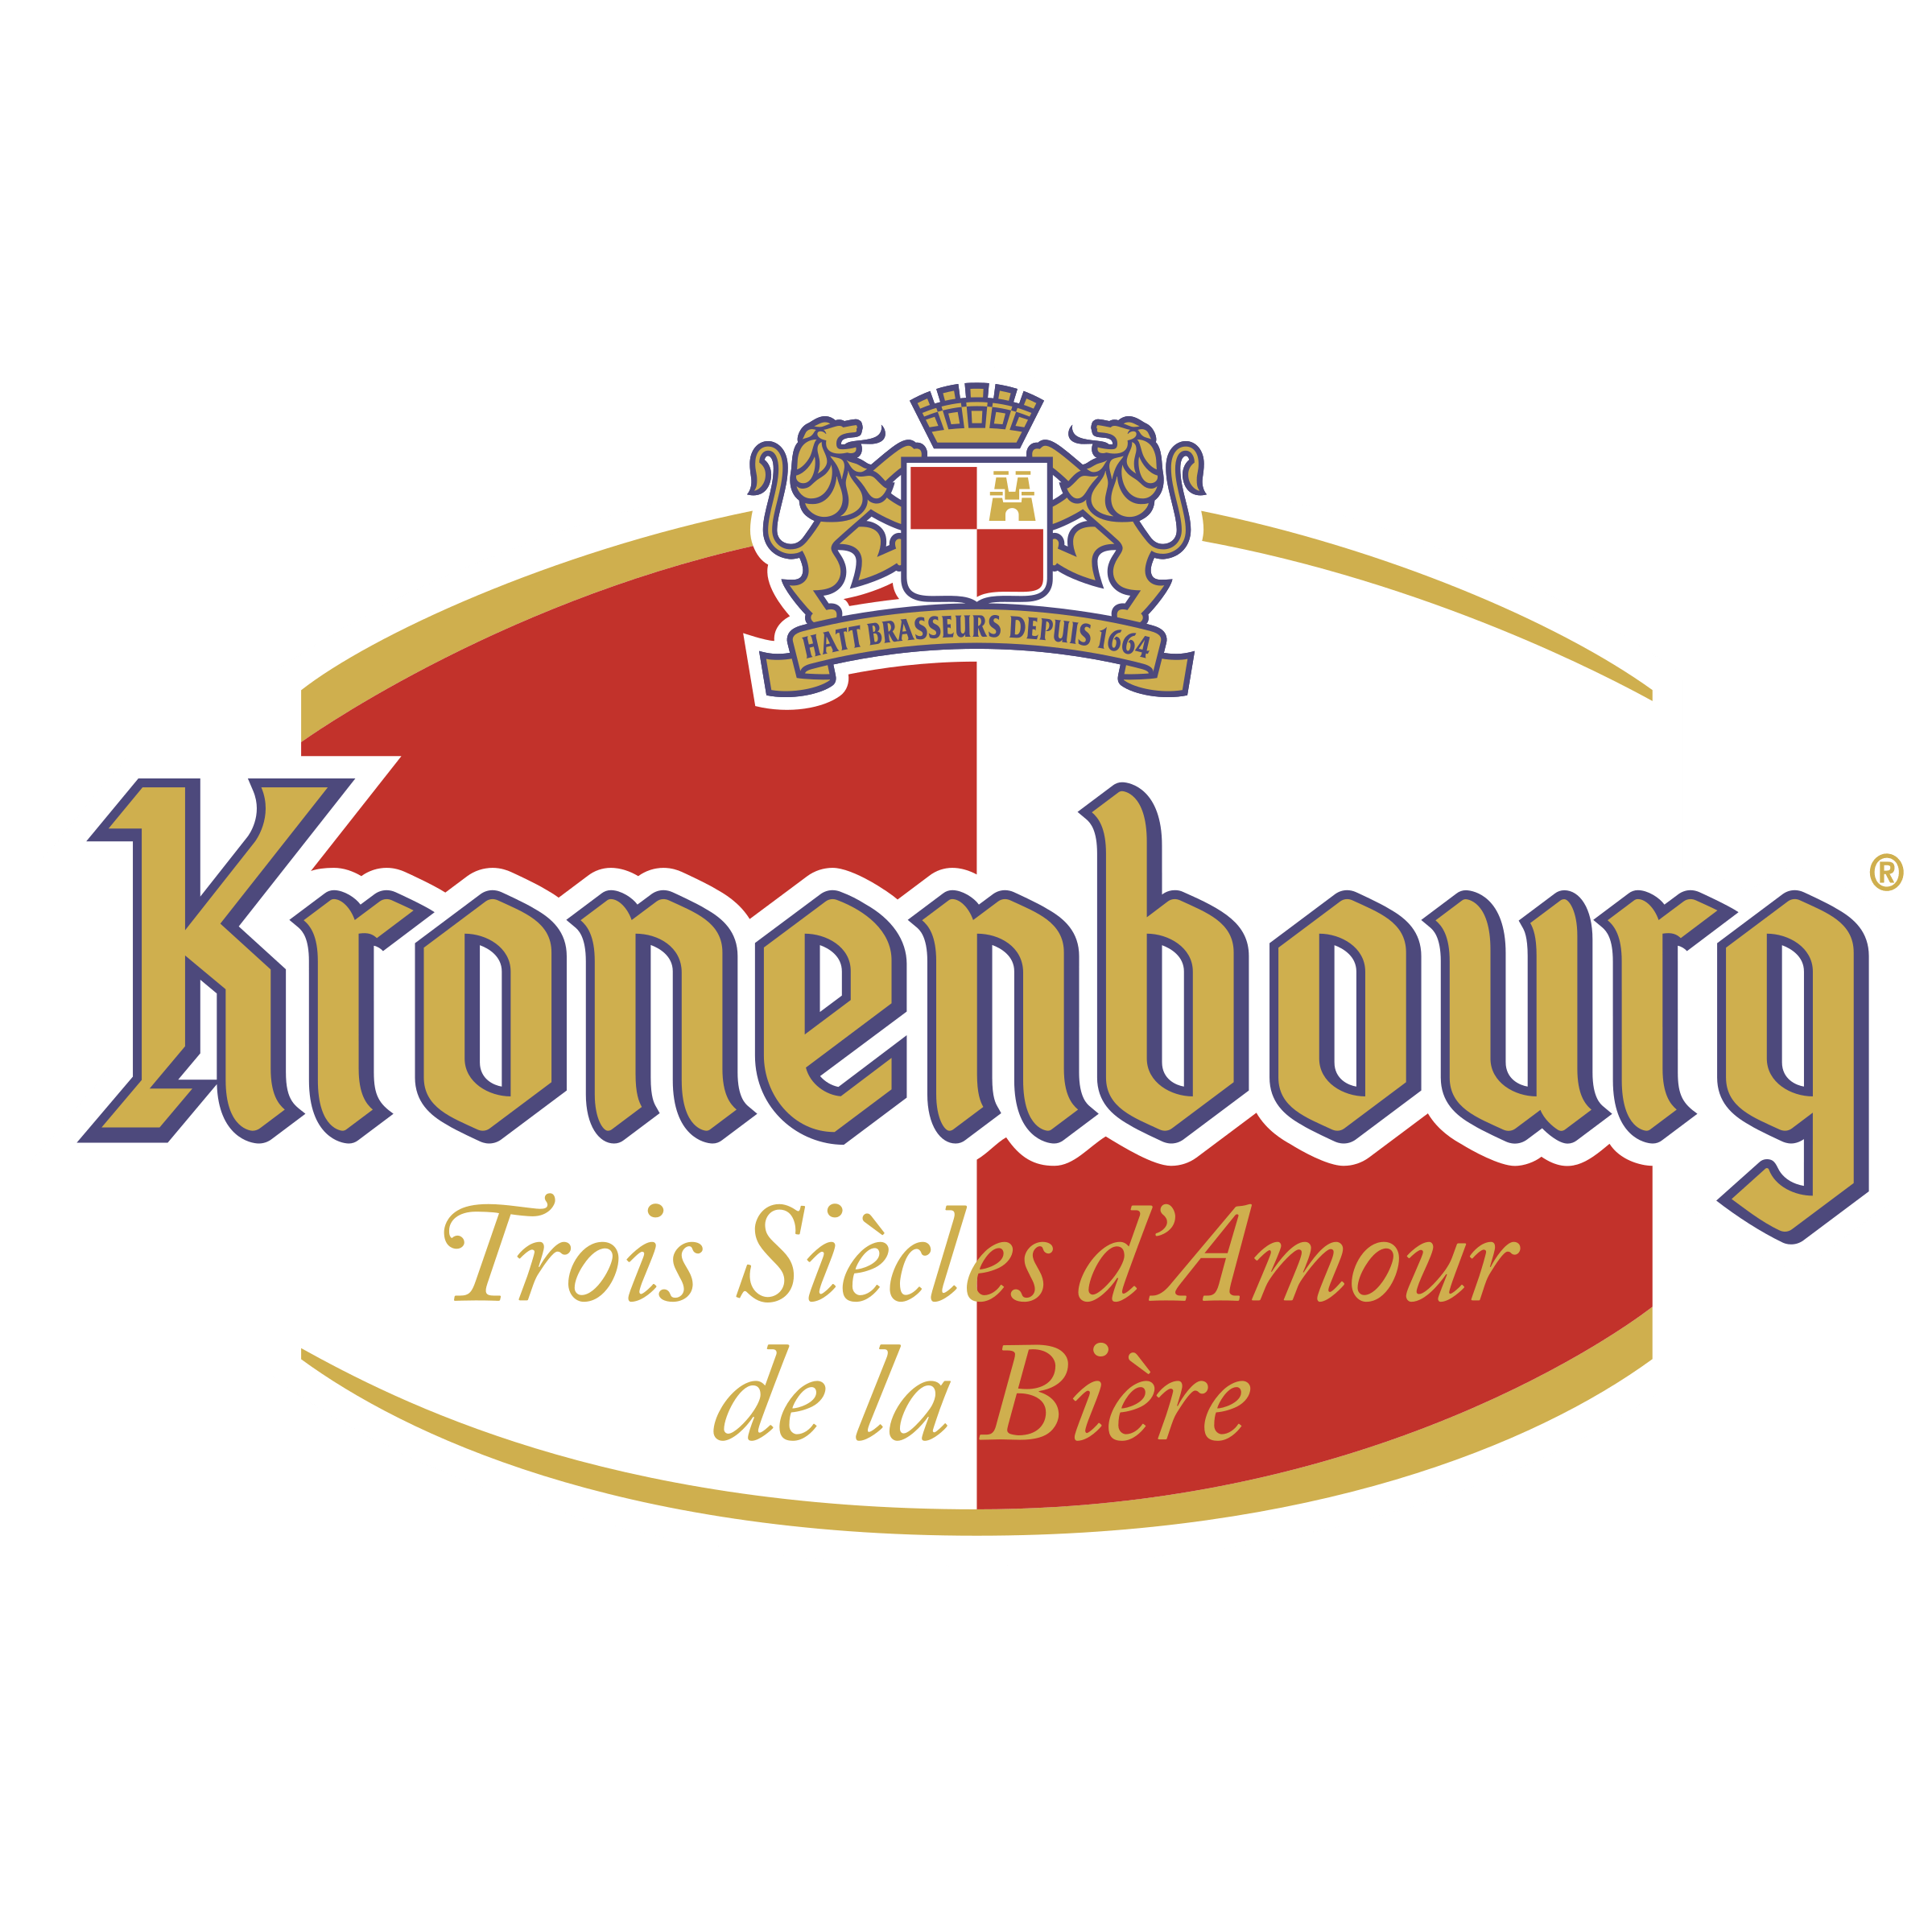 Kronenbourg Logo - Kronenbourg Logo PNG Transparent & SVG Vector - Freebie Supply